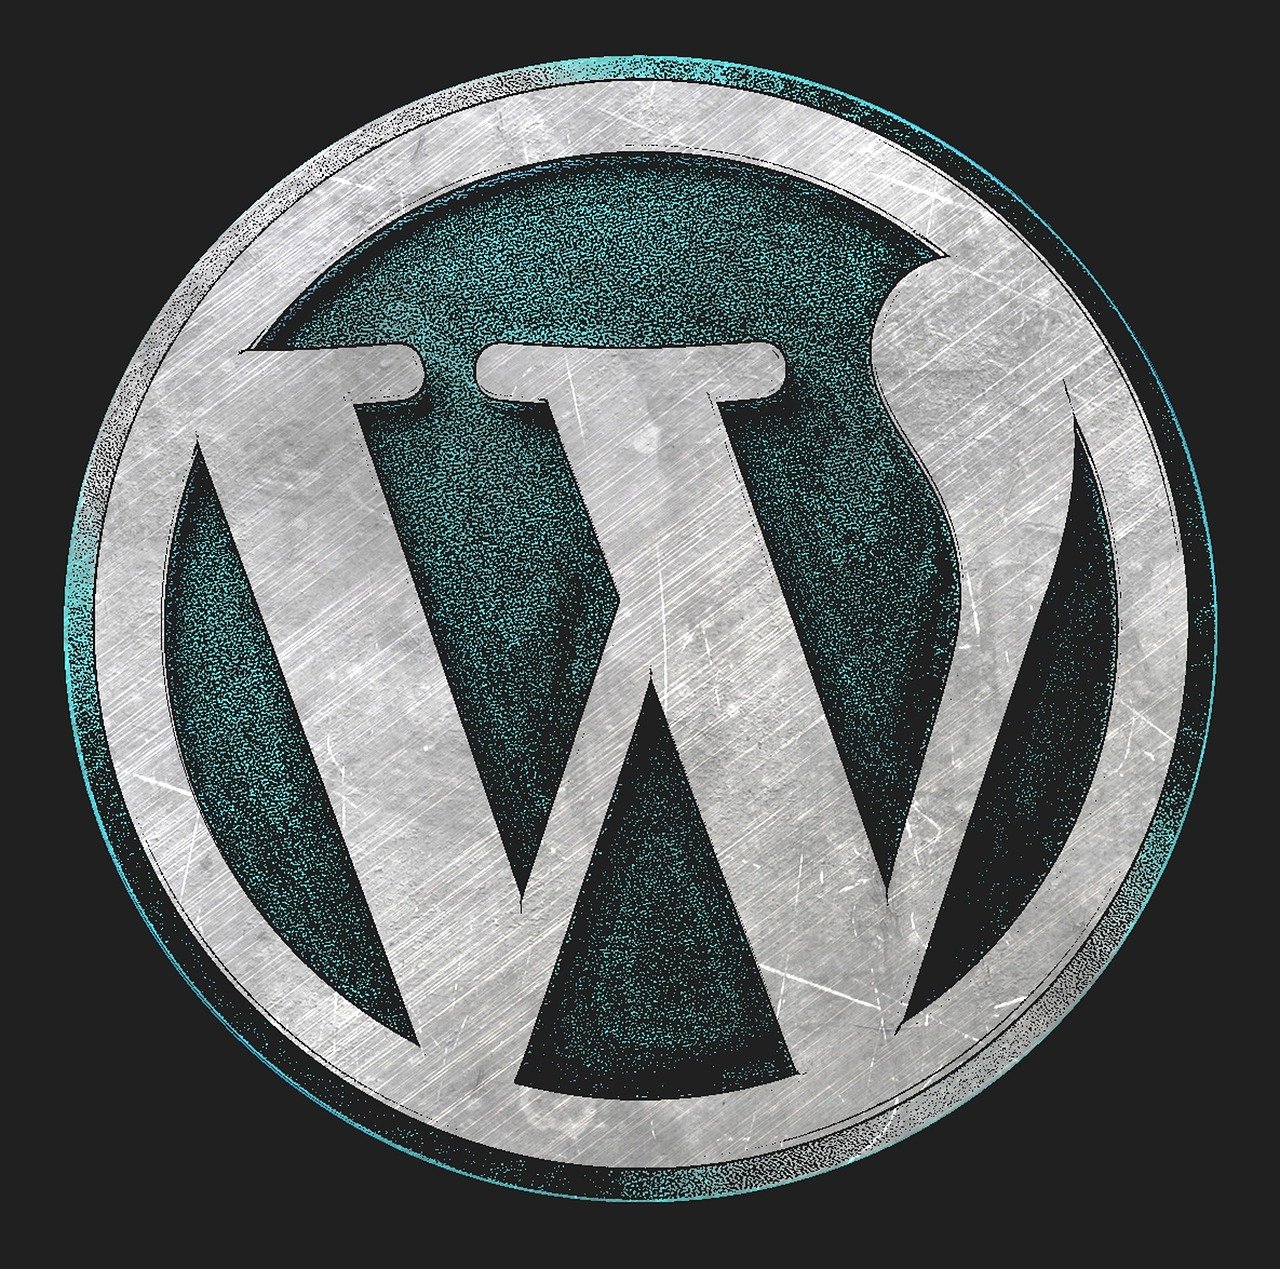 WordPress-Papierkorb via wp-config konfigurieren